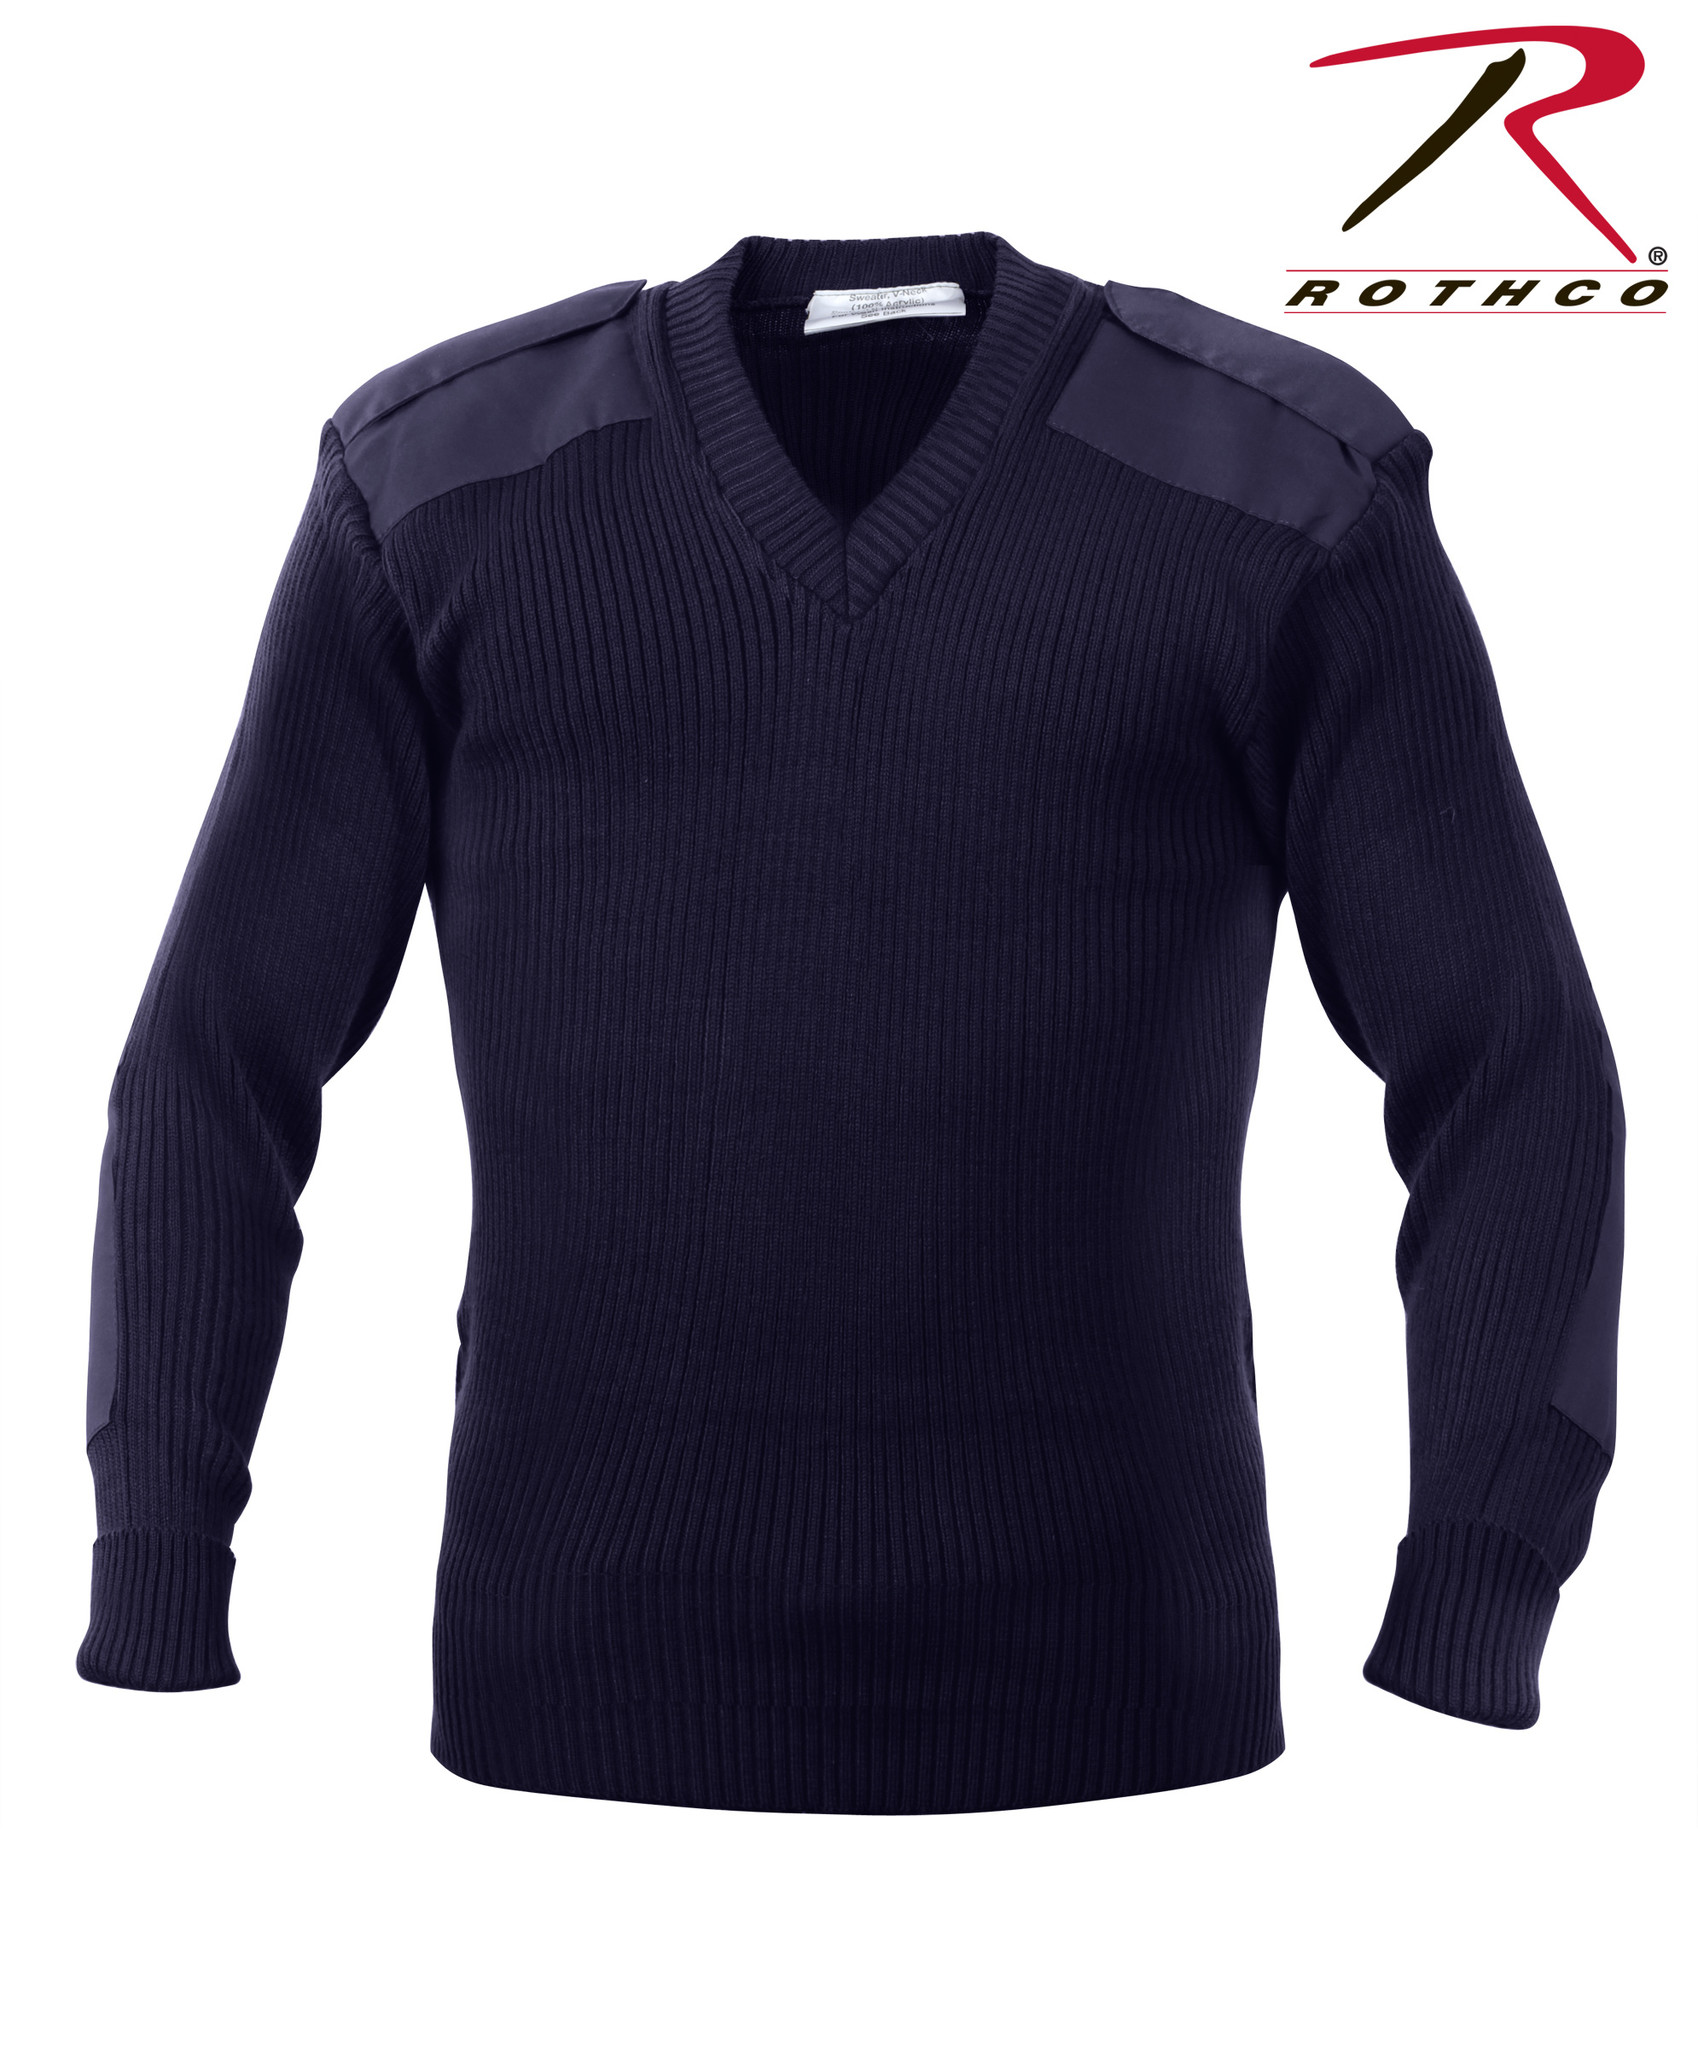 Rothco GI Style Acrylic V-Neck Sweater